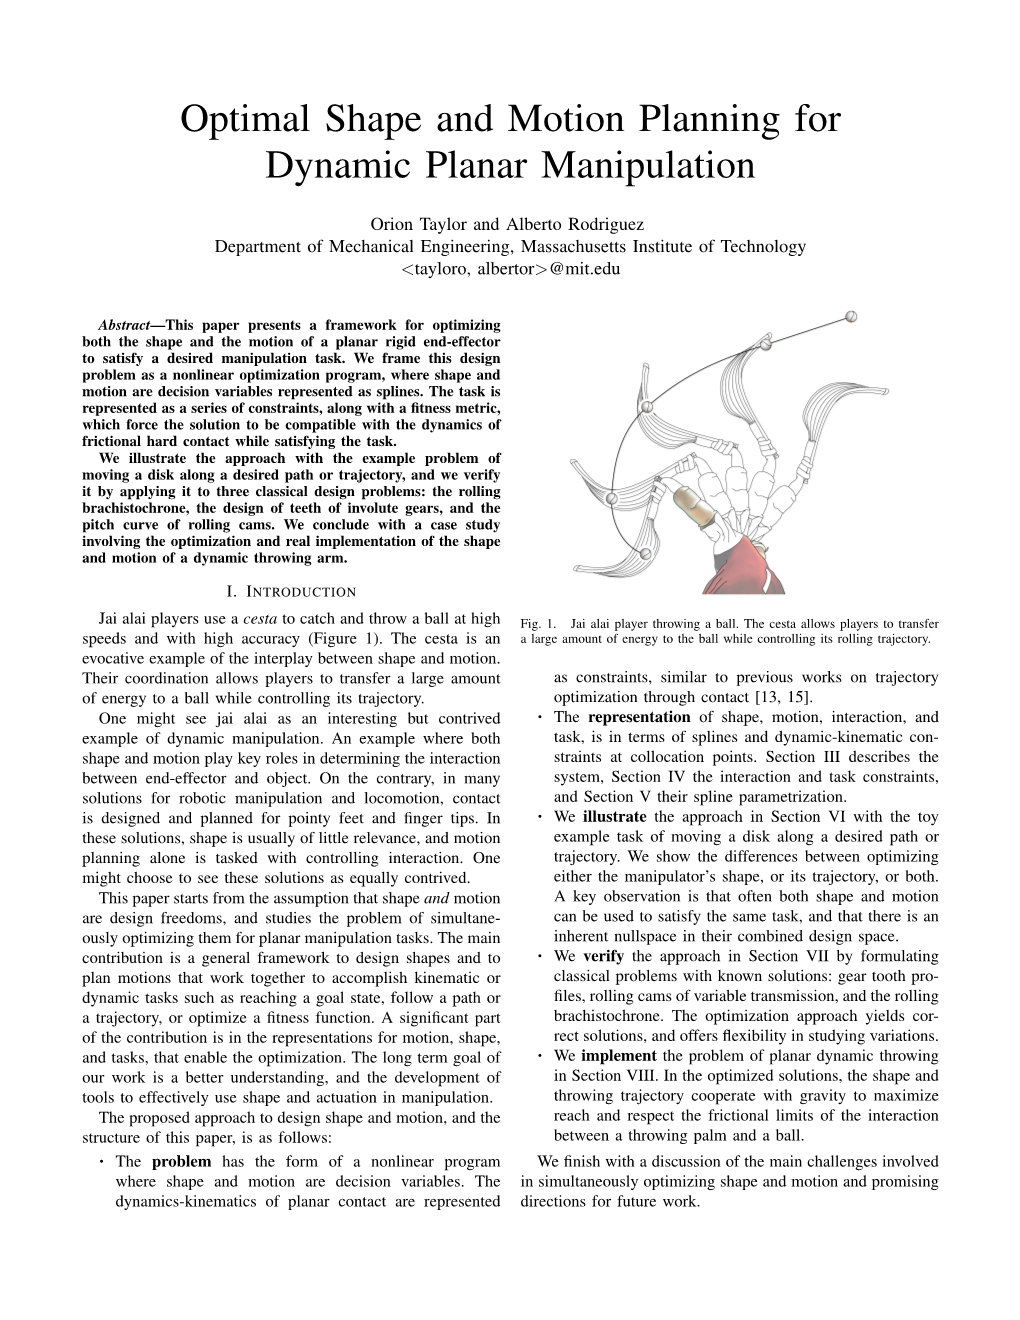 Optimal Shape and Motion Planning for Dynamic Planar Manipulation